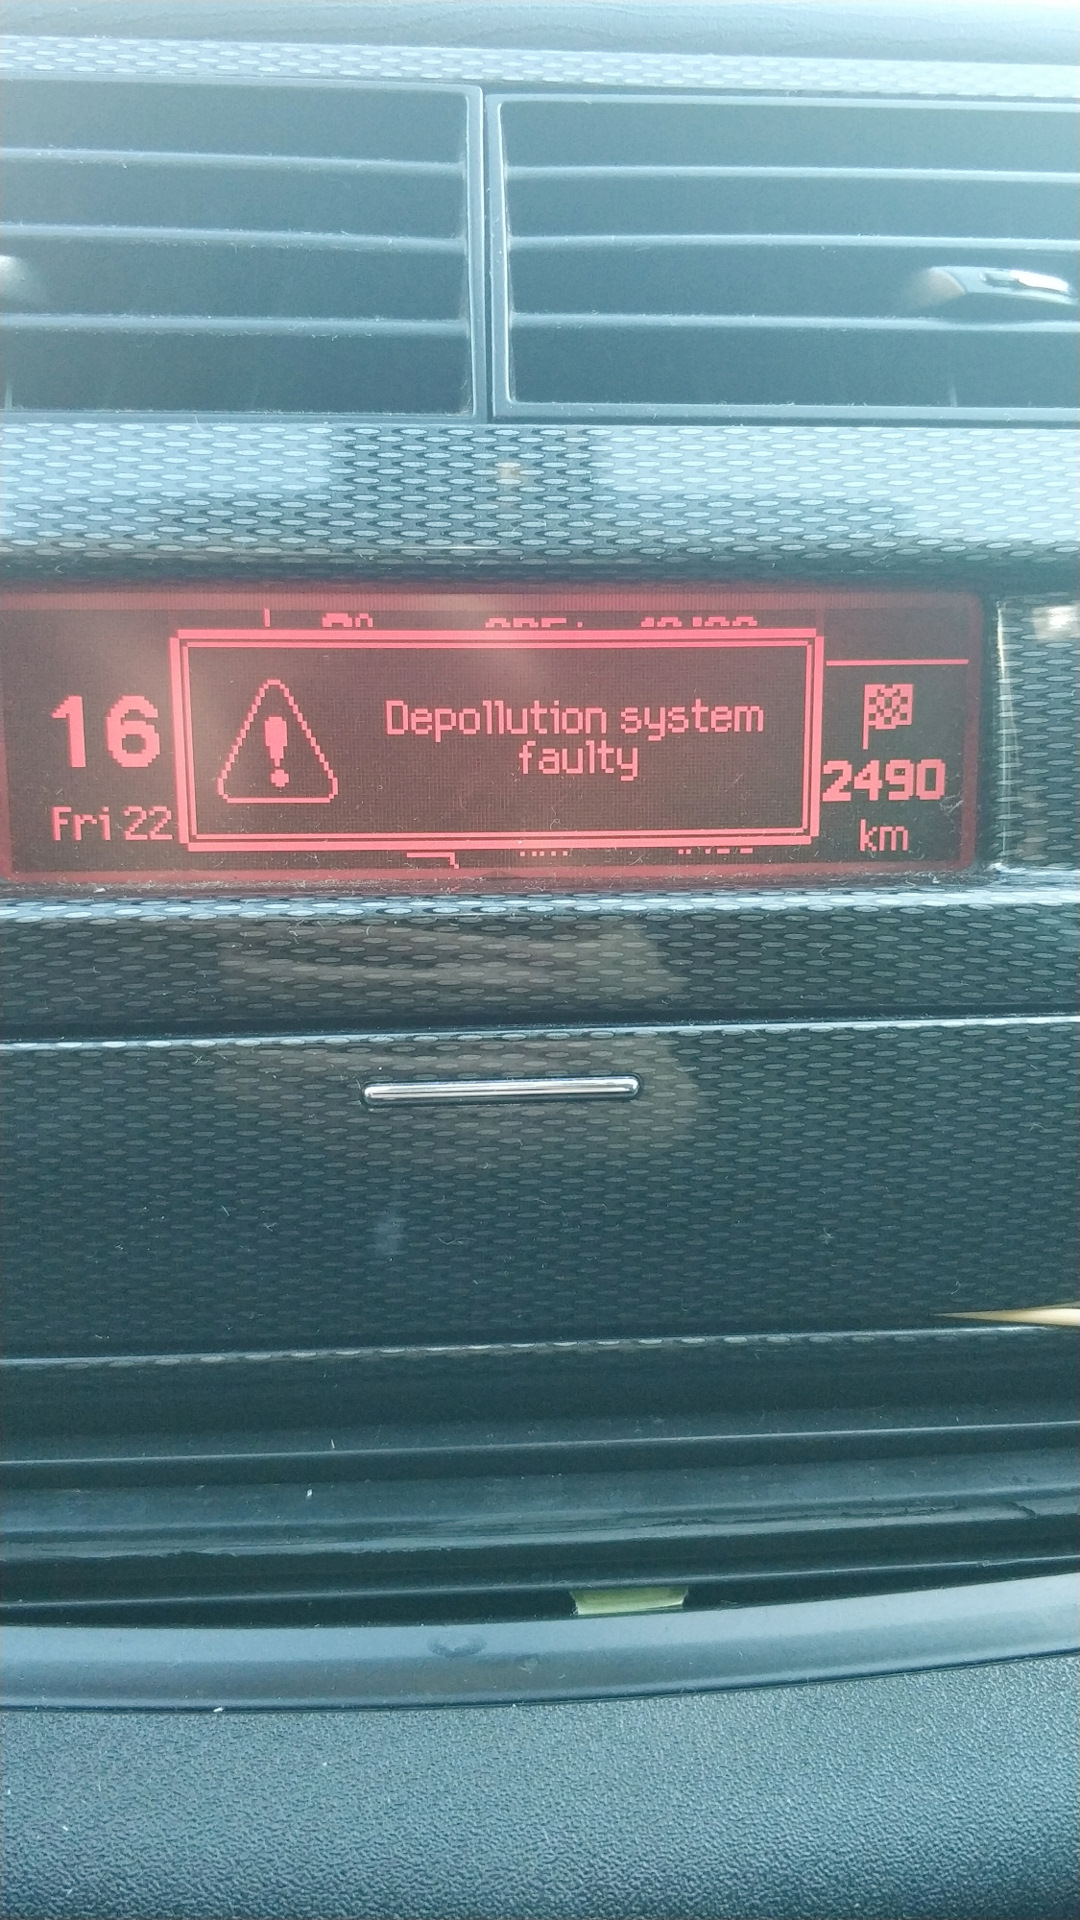 Depollution system faulty. Peugeot 308 depollution System faulty. Ситроен c4 depollution System faulty. Ситроен c4 System faulty. Depollution System faulty Peugeot 207.